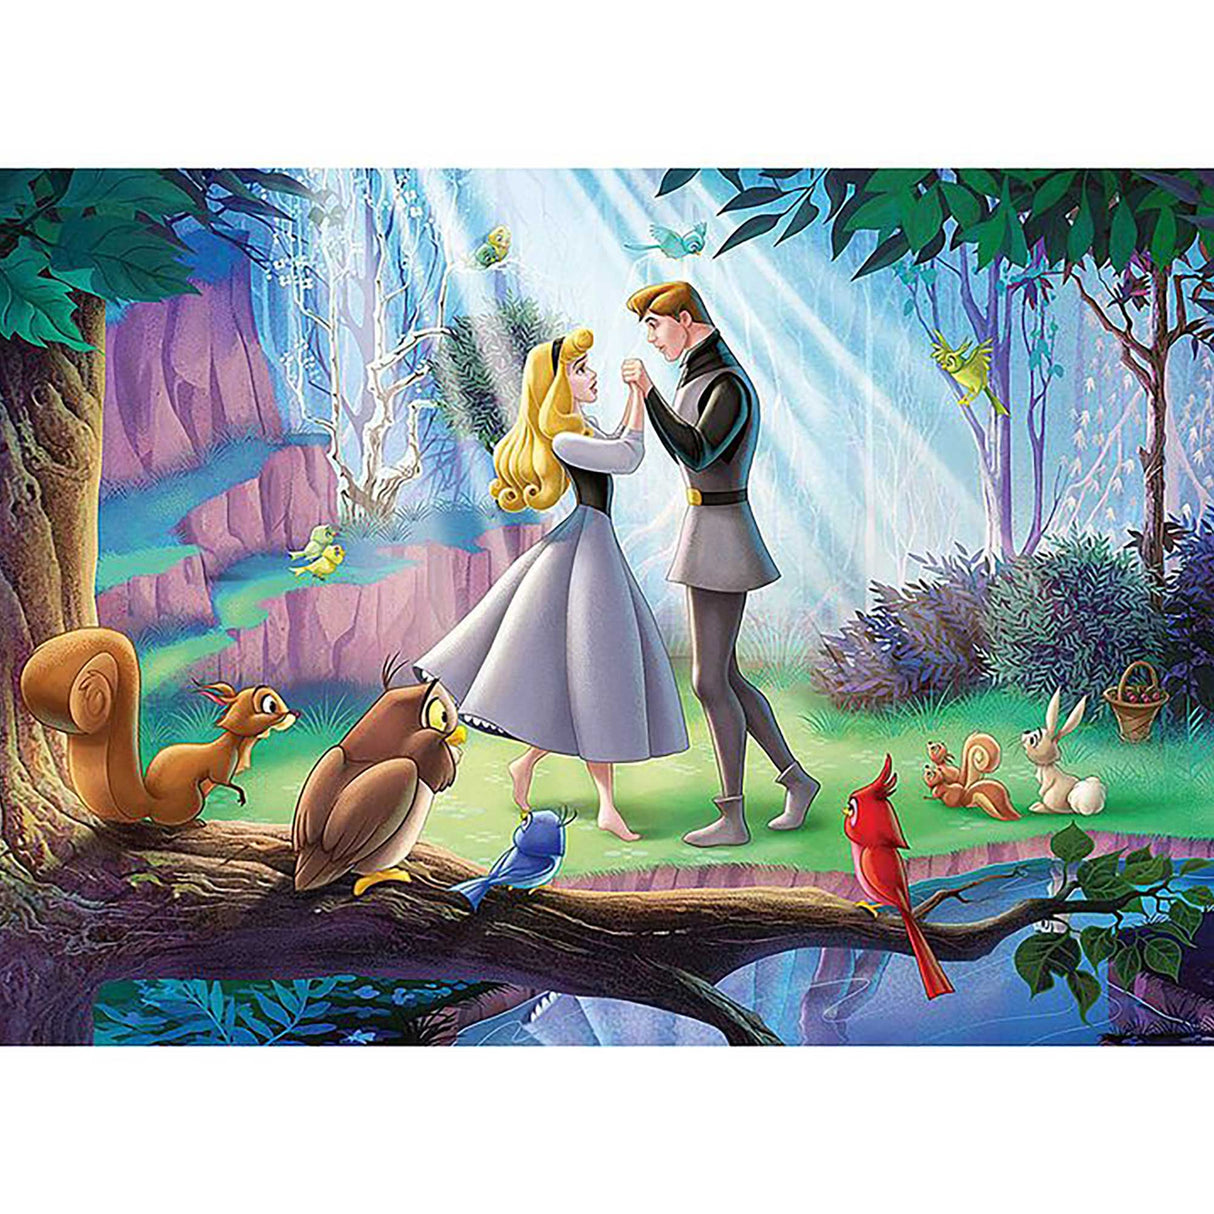 Ravensburger Disney Moments Sleeping Beauty Jigsaw Puzzle (1000 pieces)